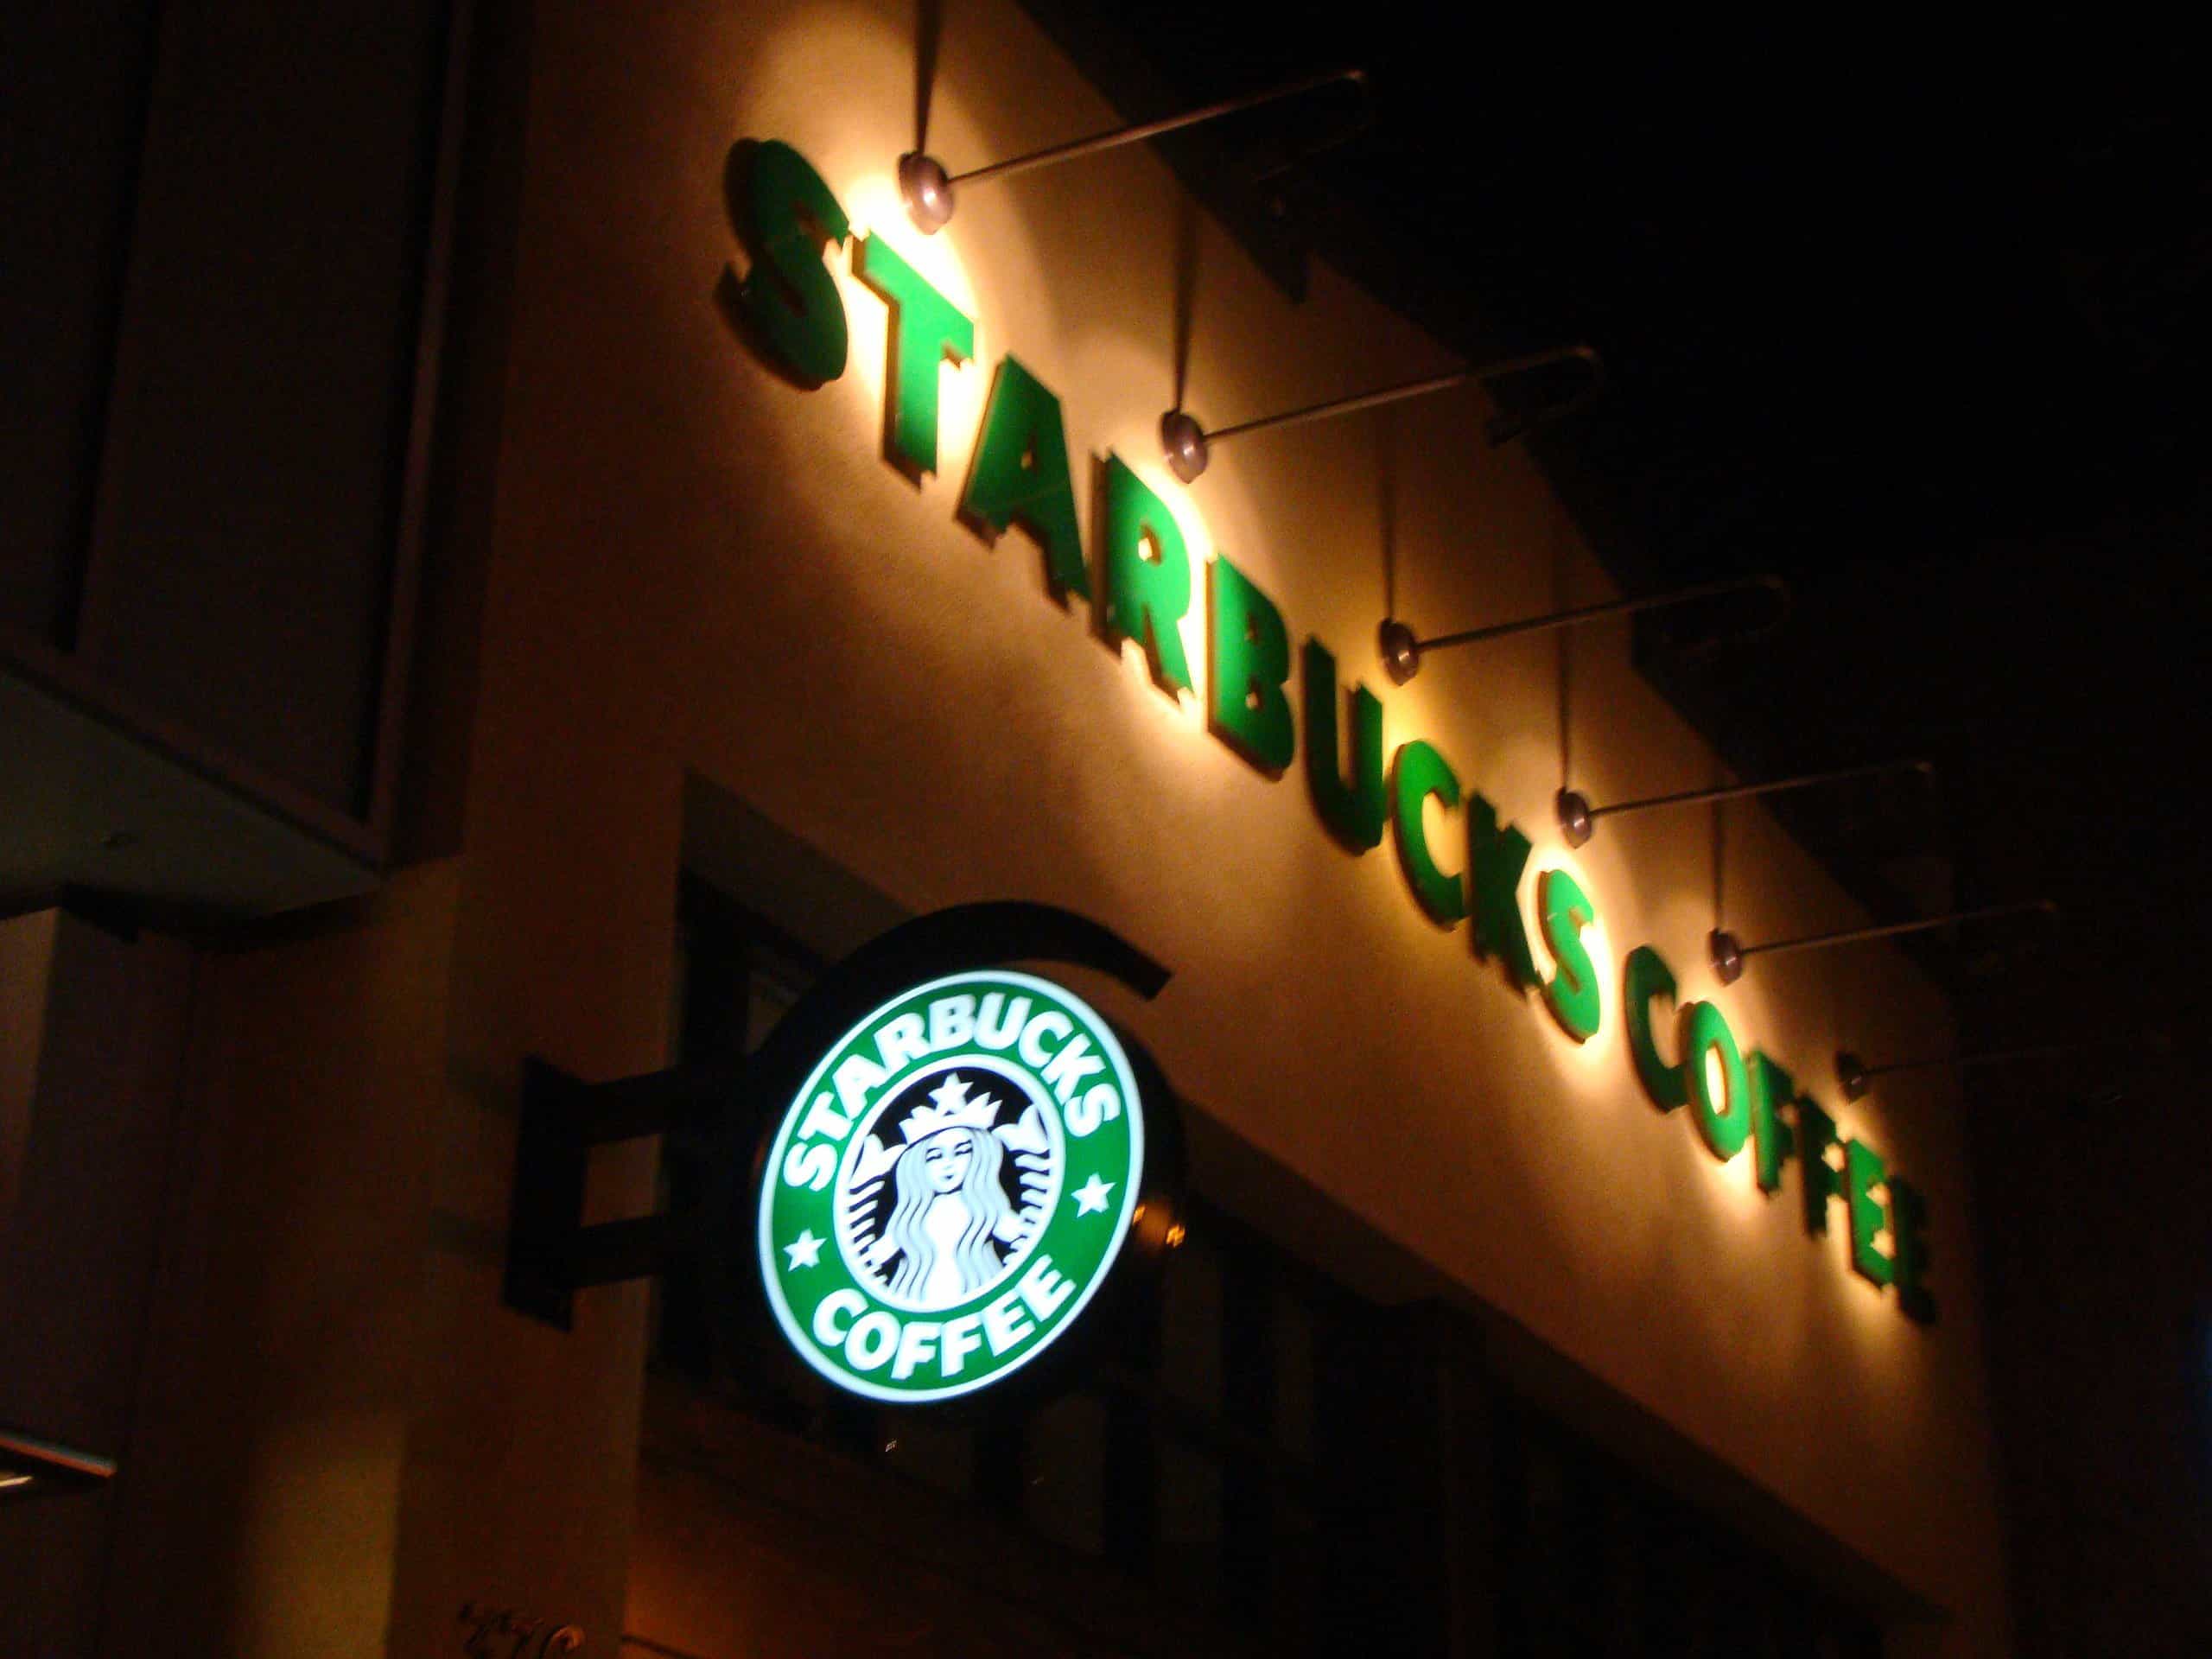 Starbucks signage at night